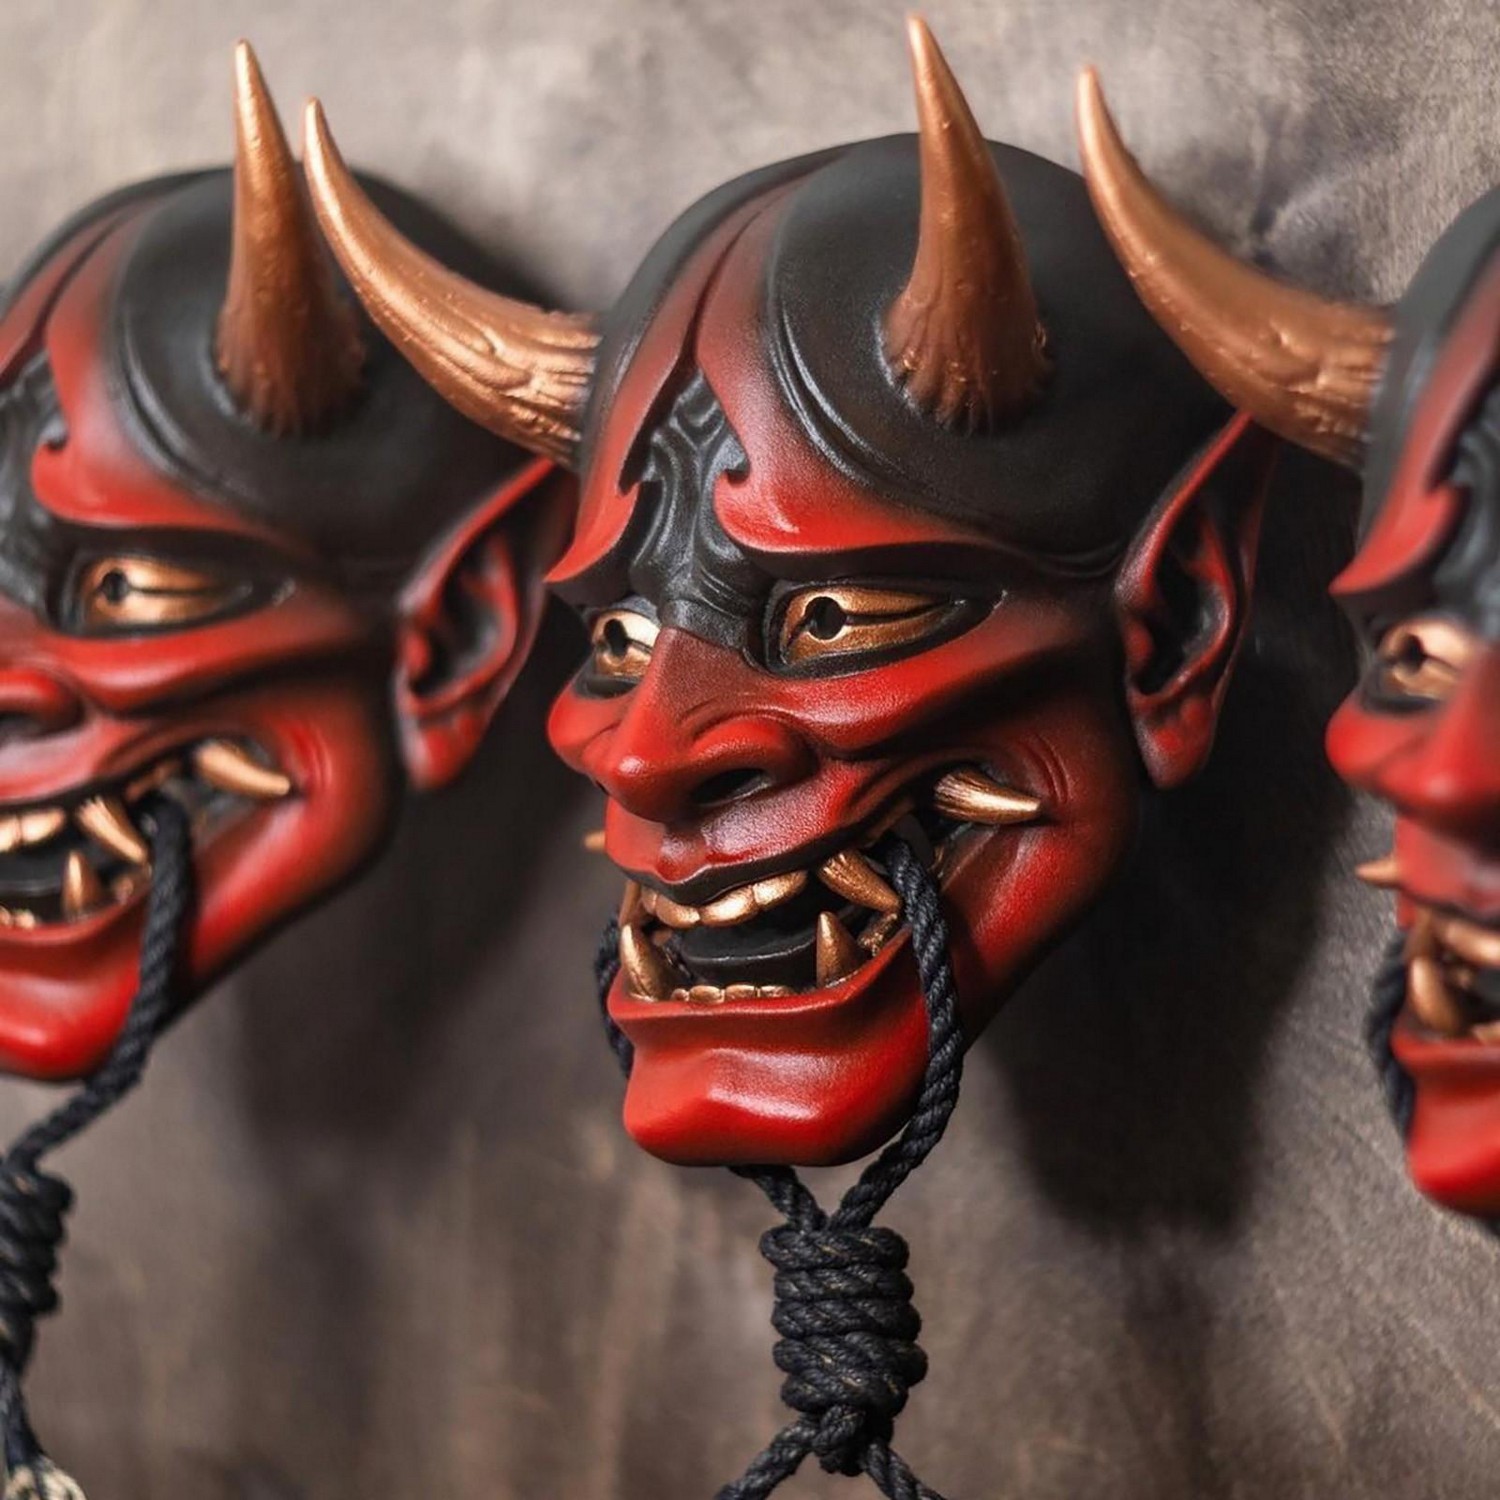 demon head mask for Halloween - Japanese motif